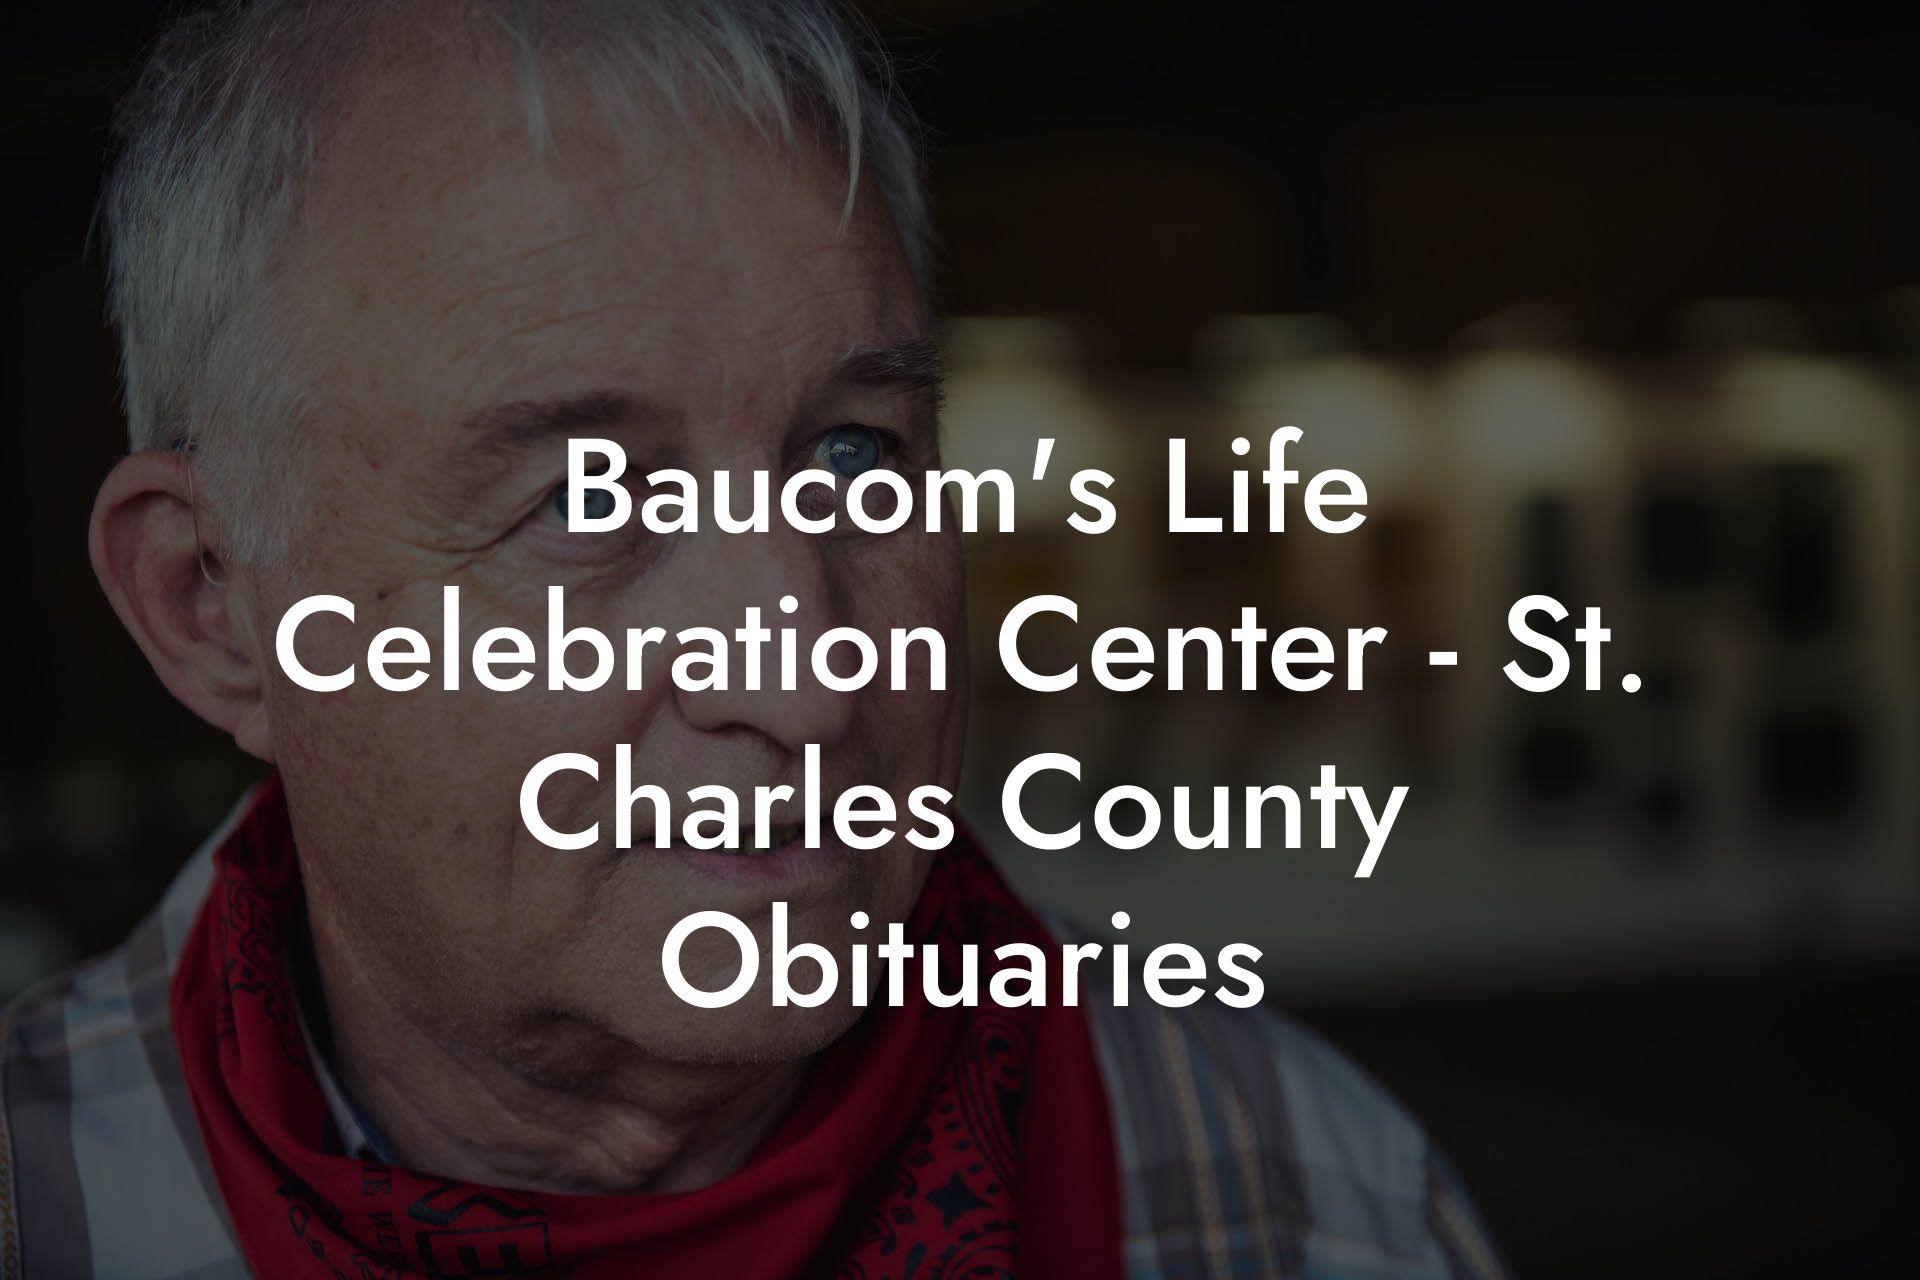 Baucom's Life Celebration Center - St. Charles County Obituaries